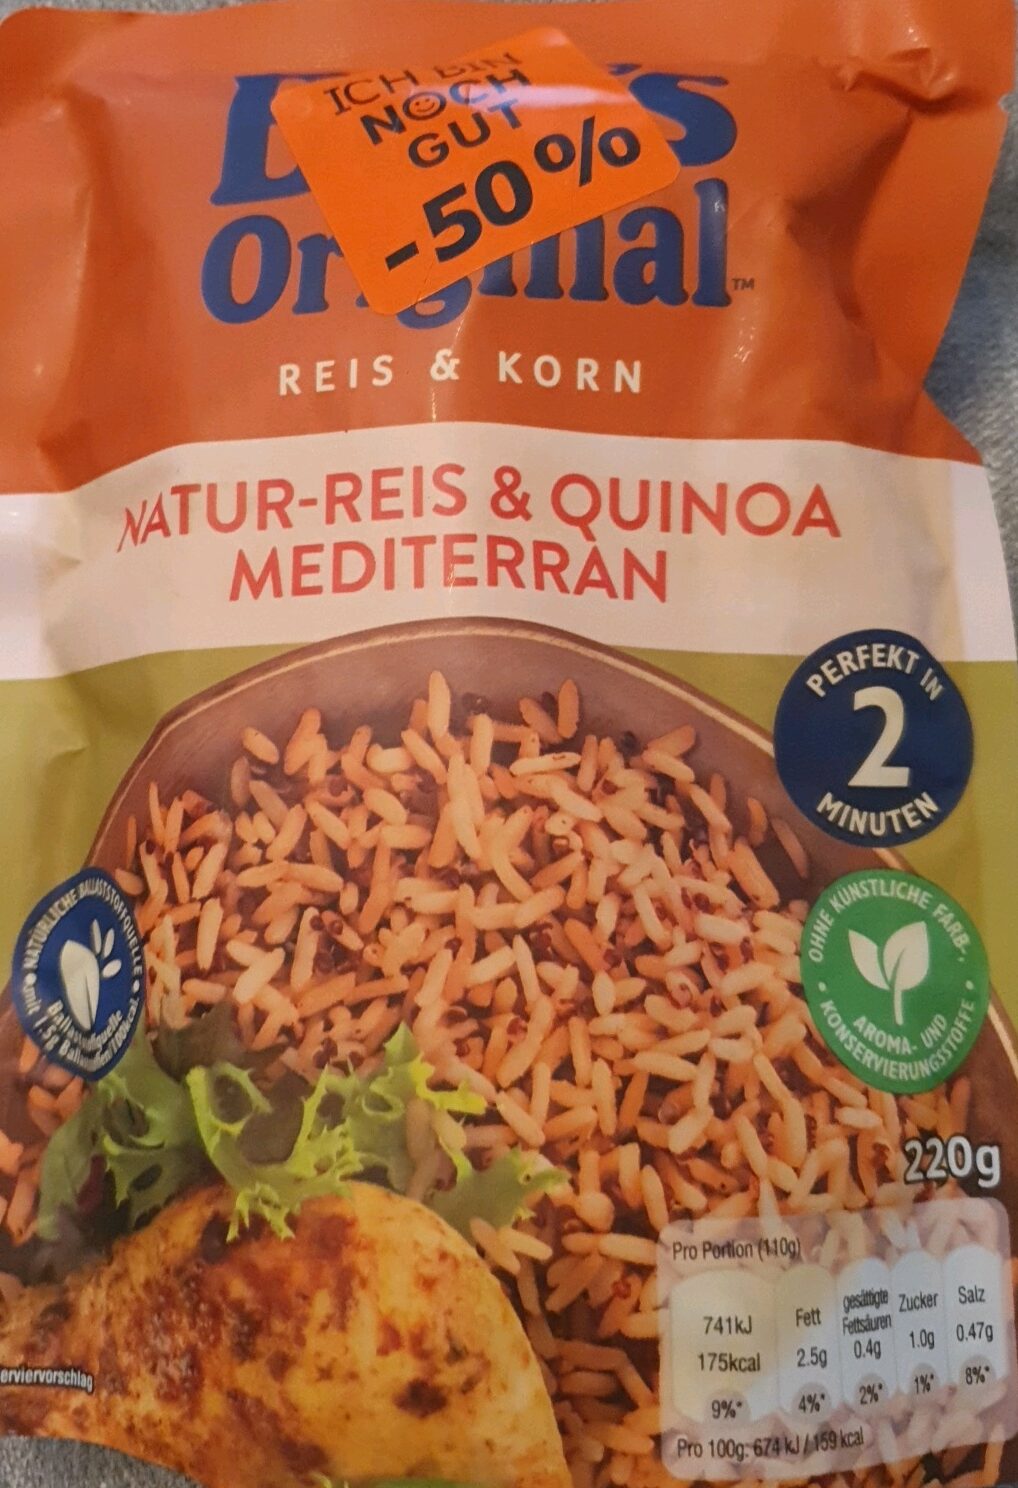 Express-Reis & Korn - Naturreis & Quinoa Mediterran - Product - de